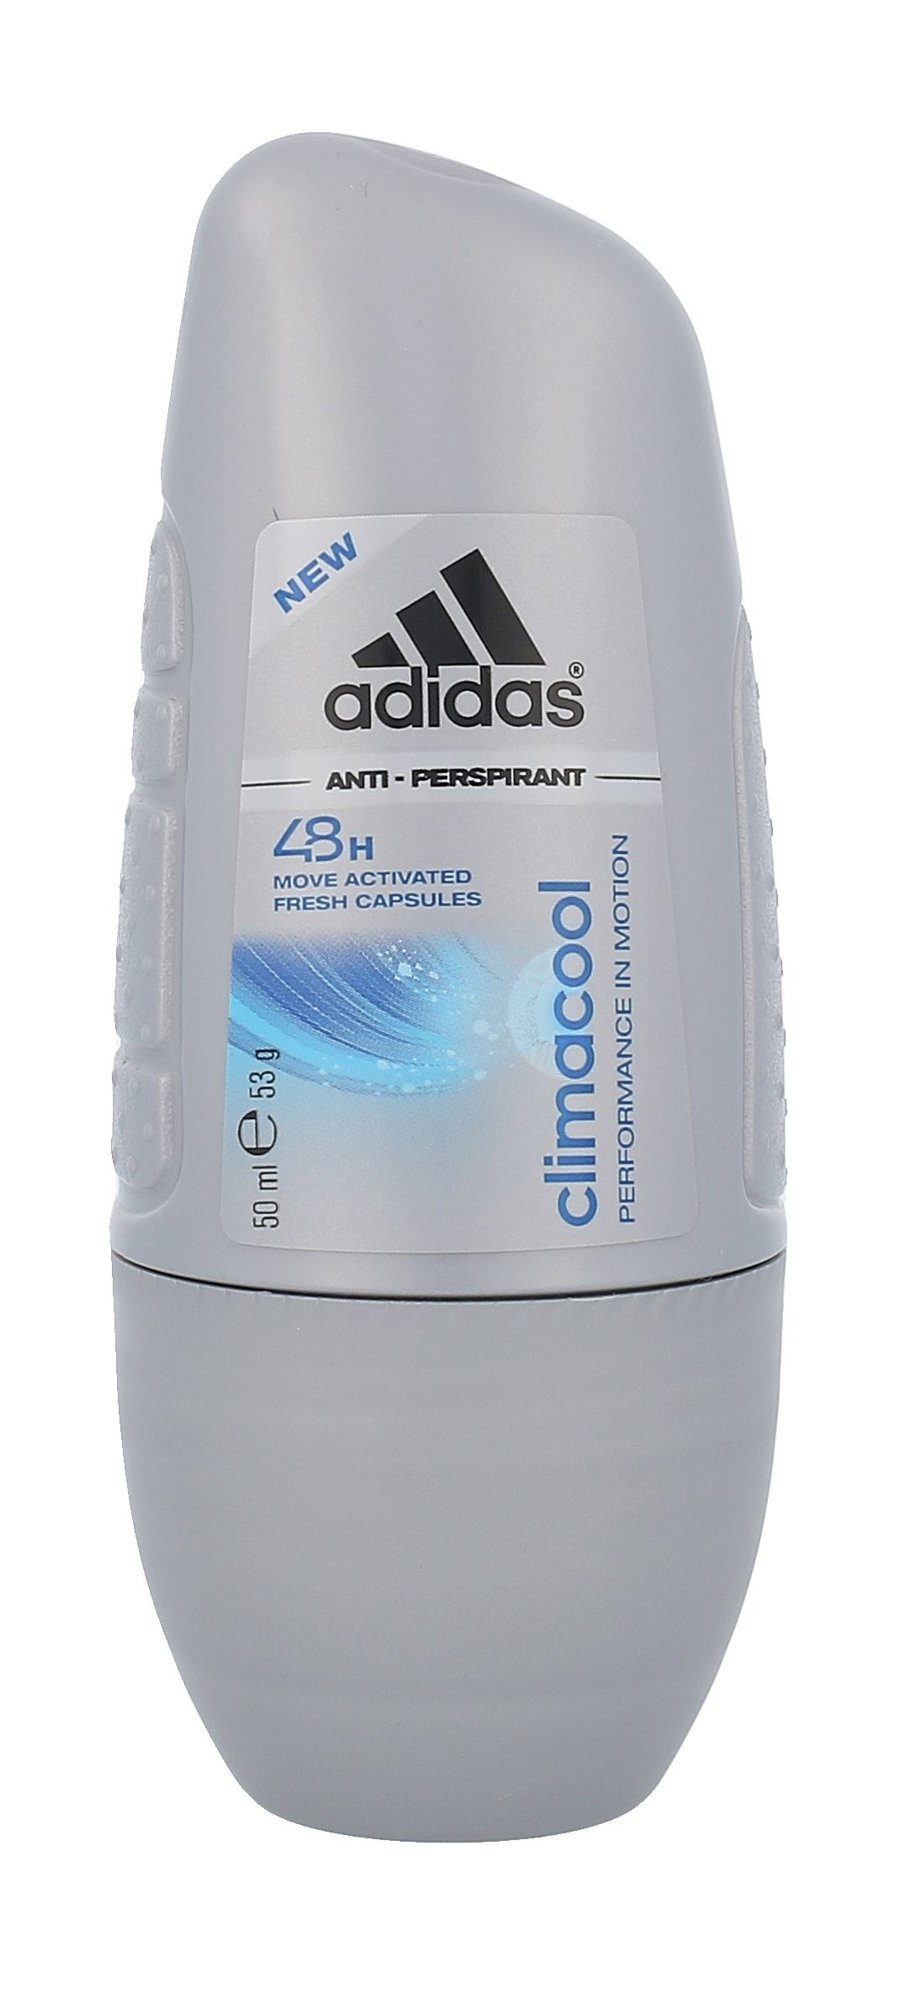 Adidas Climacool 48H 50ml antipersperantas